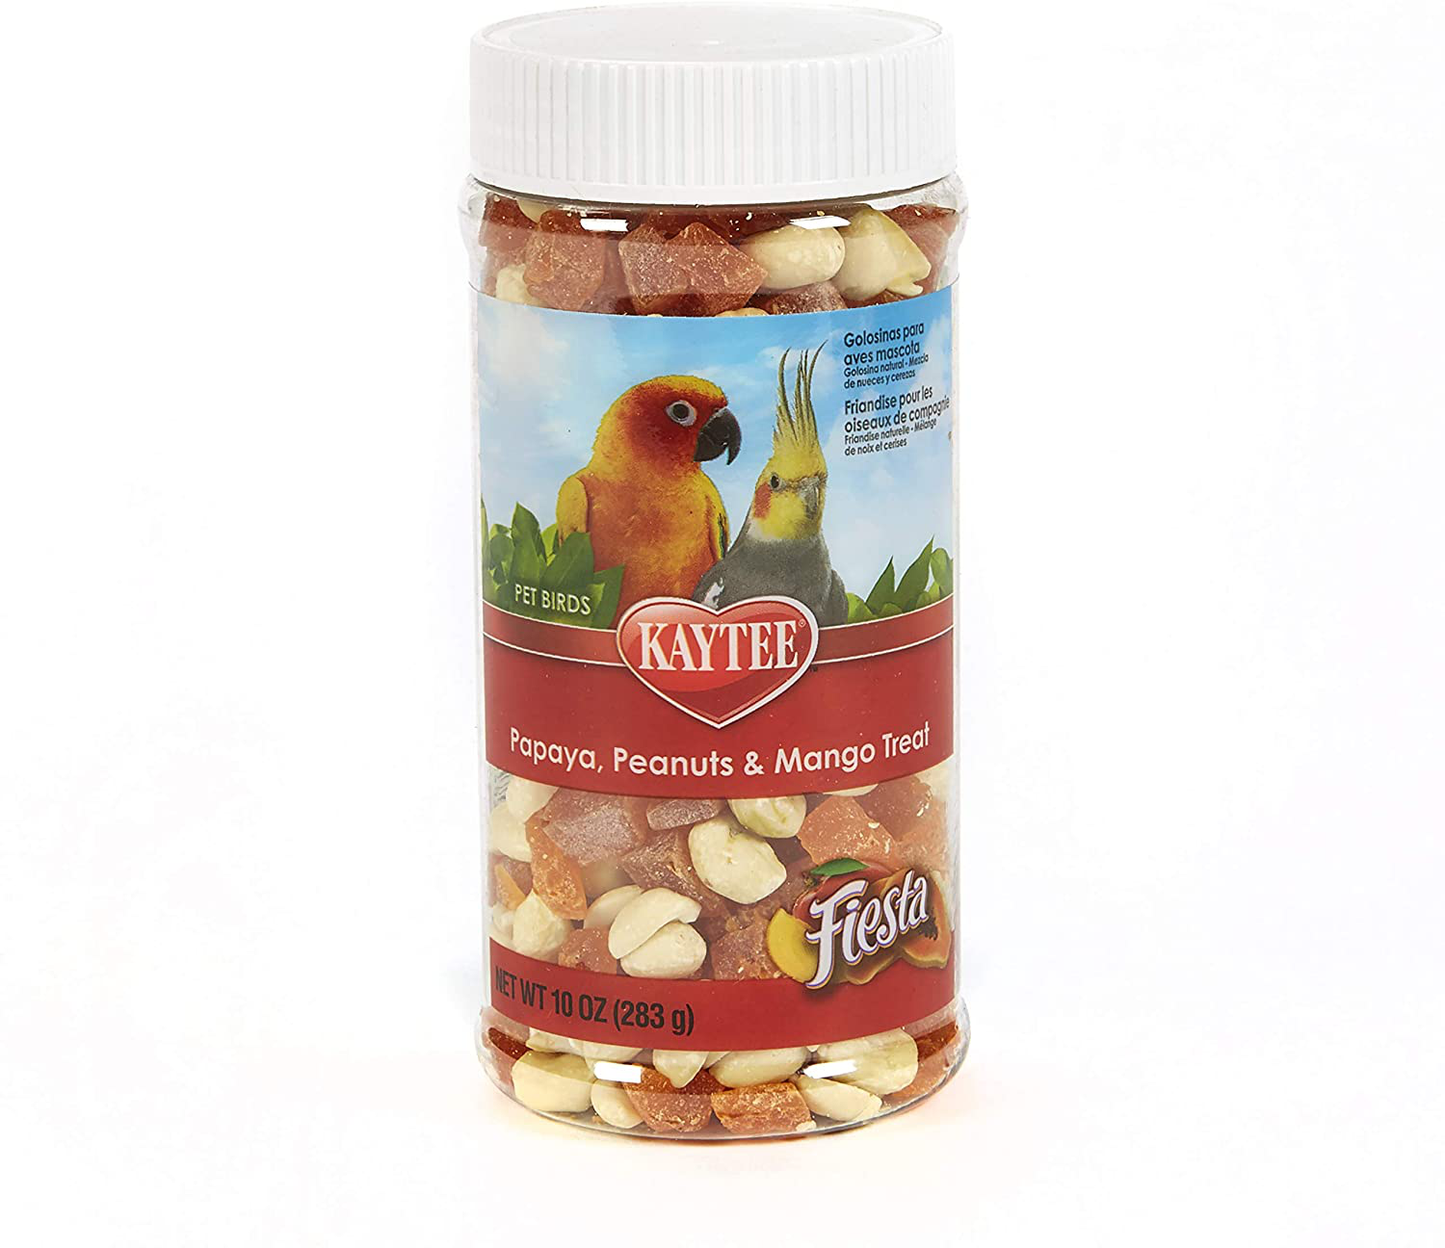 Kaytee Fiesta Papaya, Peanuts and Mango Treat for All Pet Birds, 10-Oz Jar